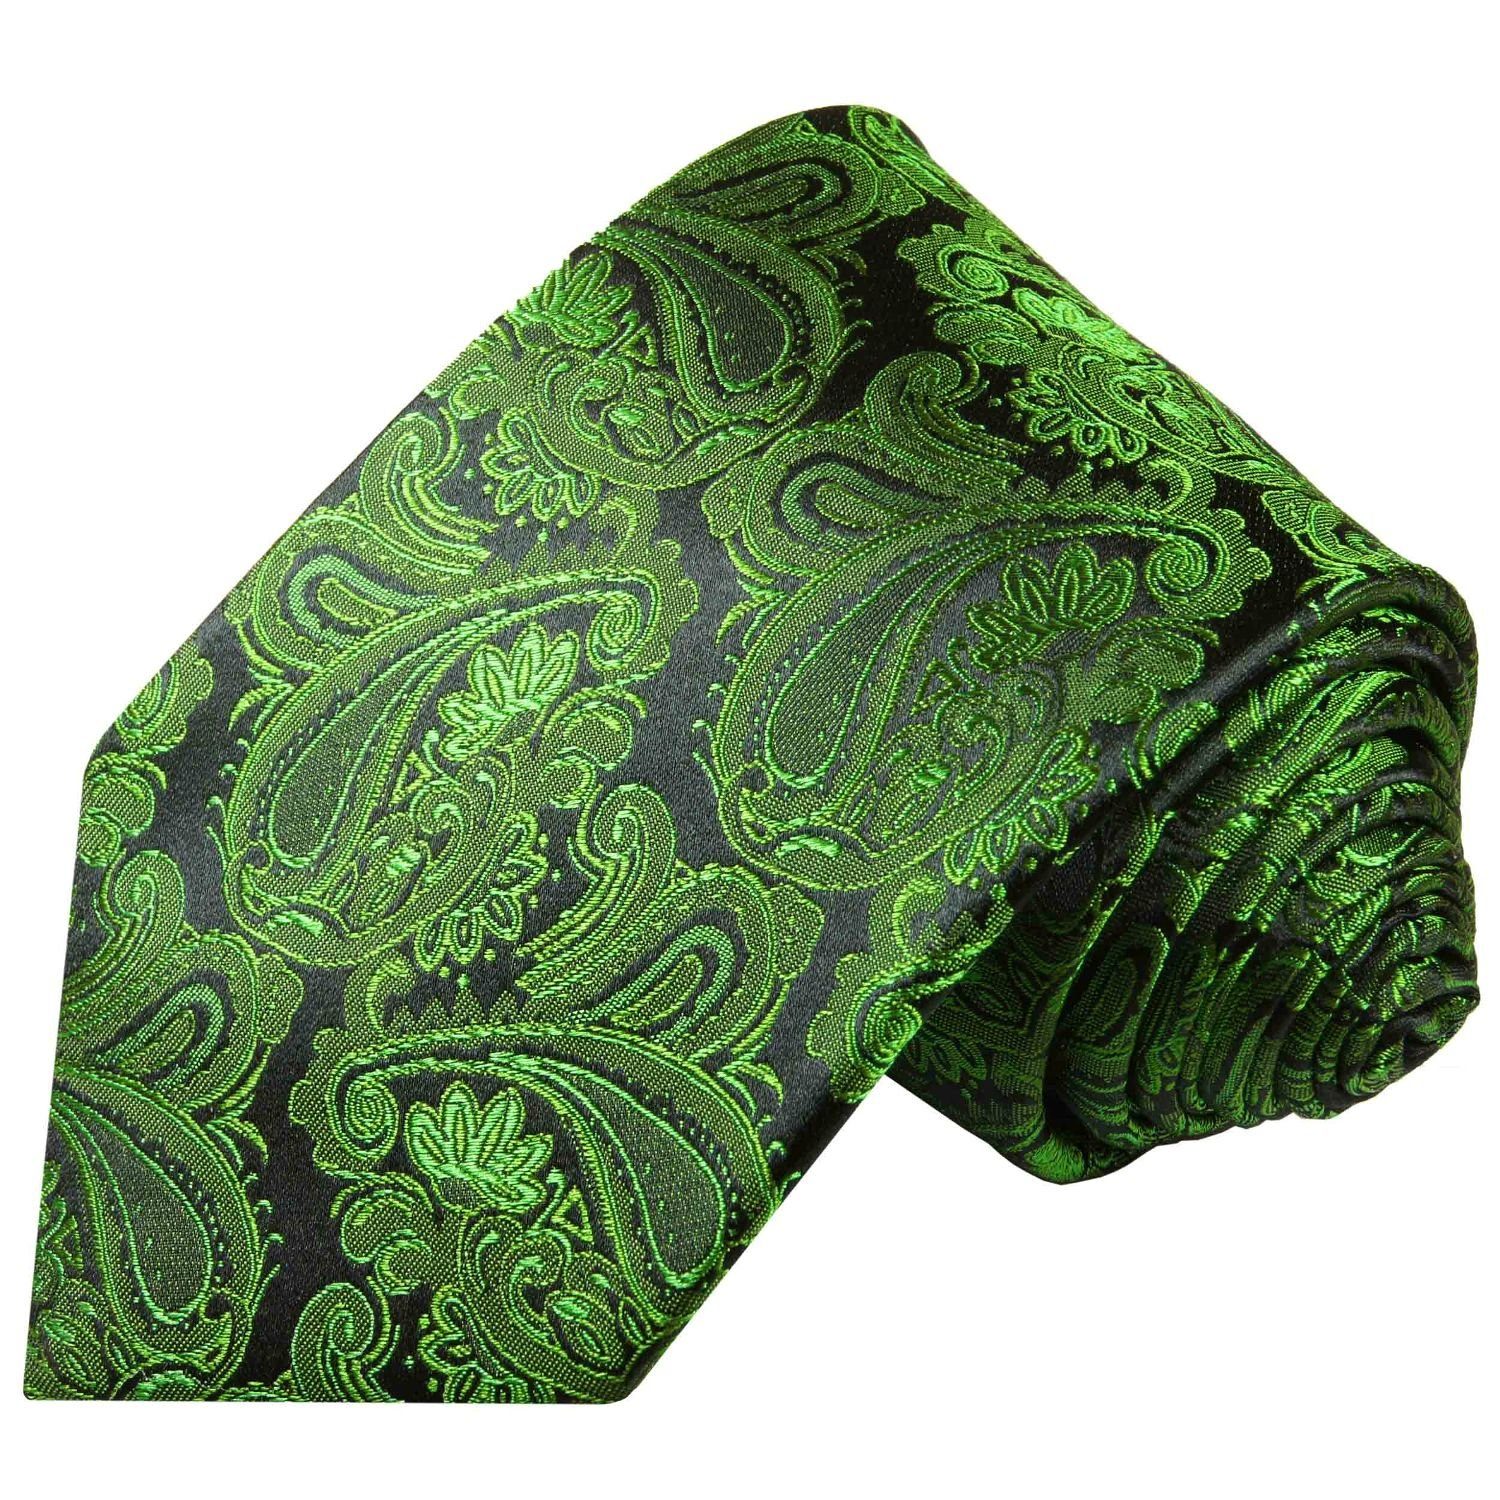 Paul Malone Krawatte Herren Seidenkrawatte Schlips modern paisley 100% Seide Breit (8cm), grün schwarz 379